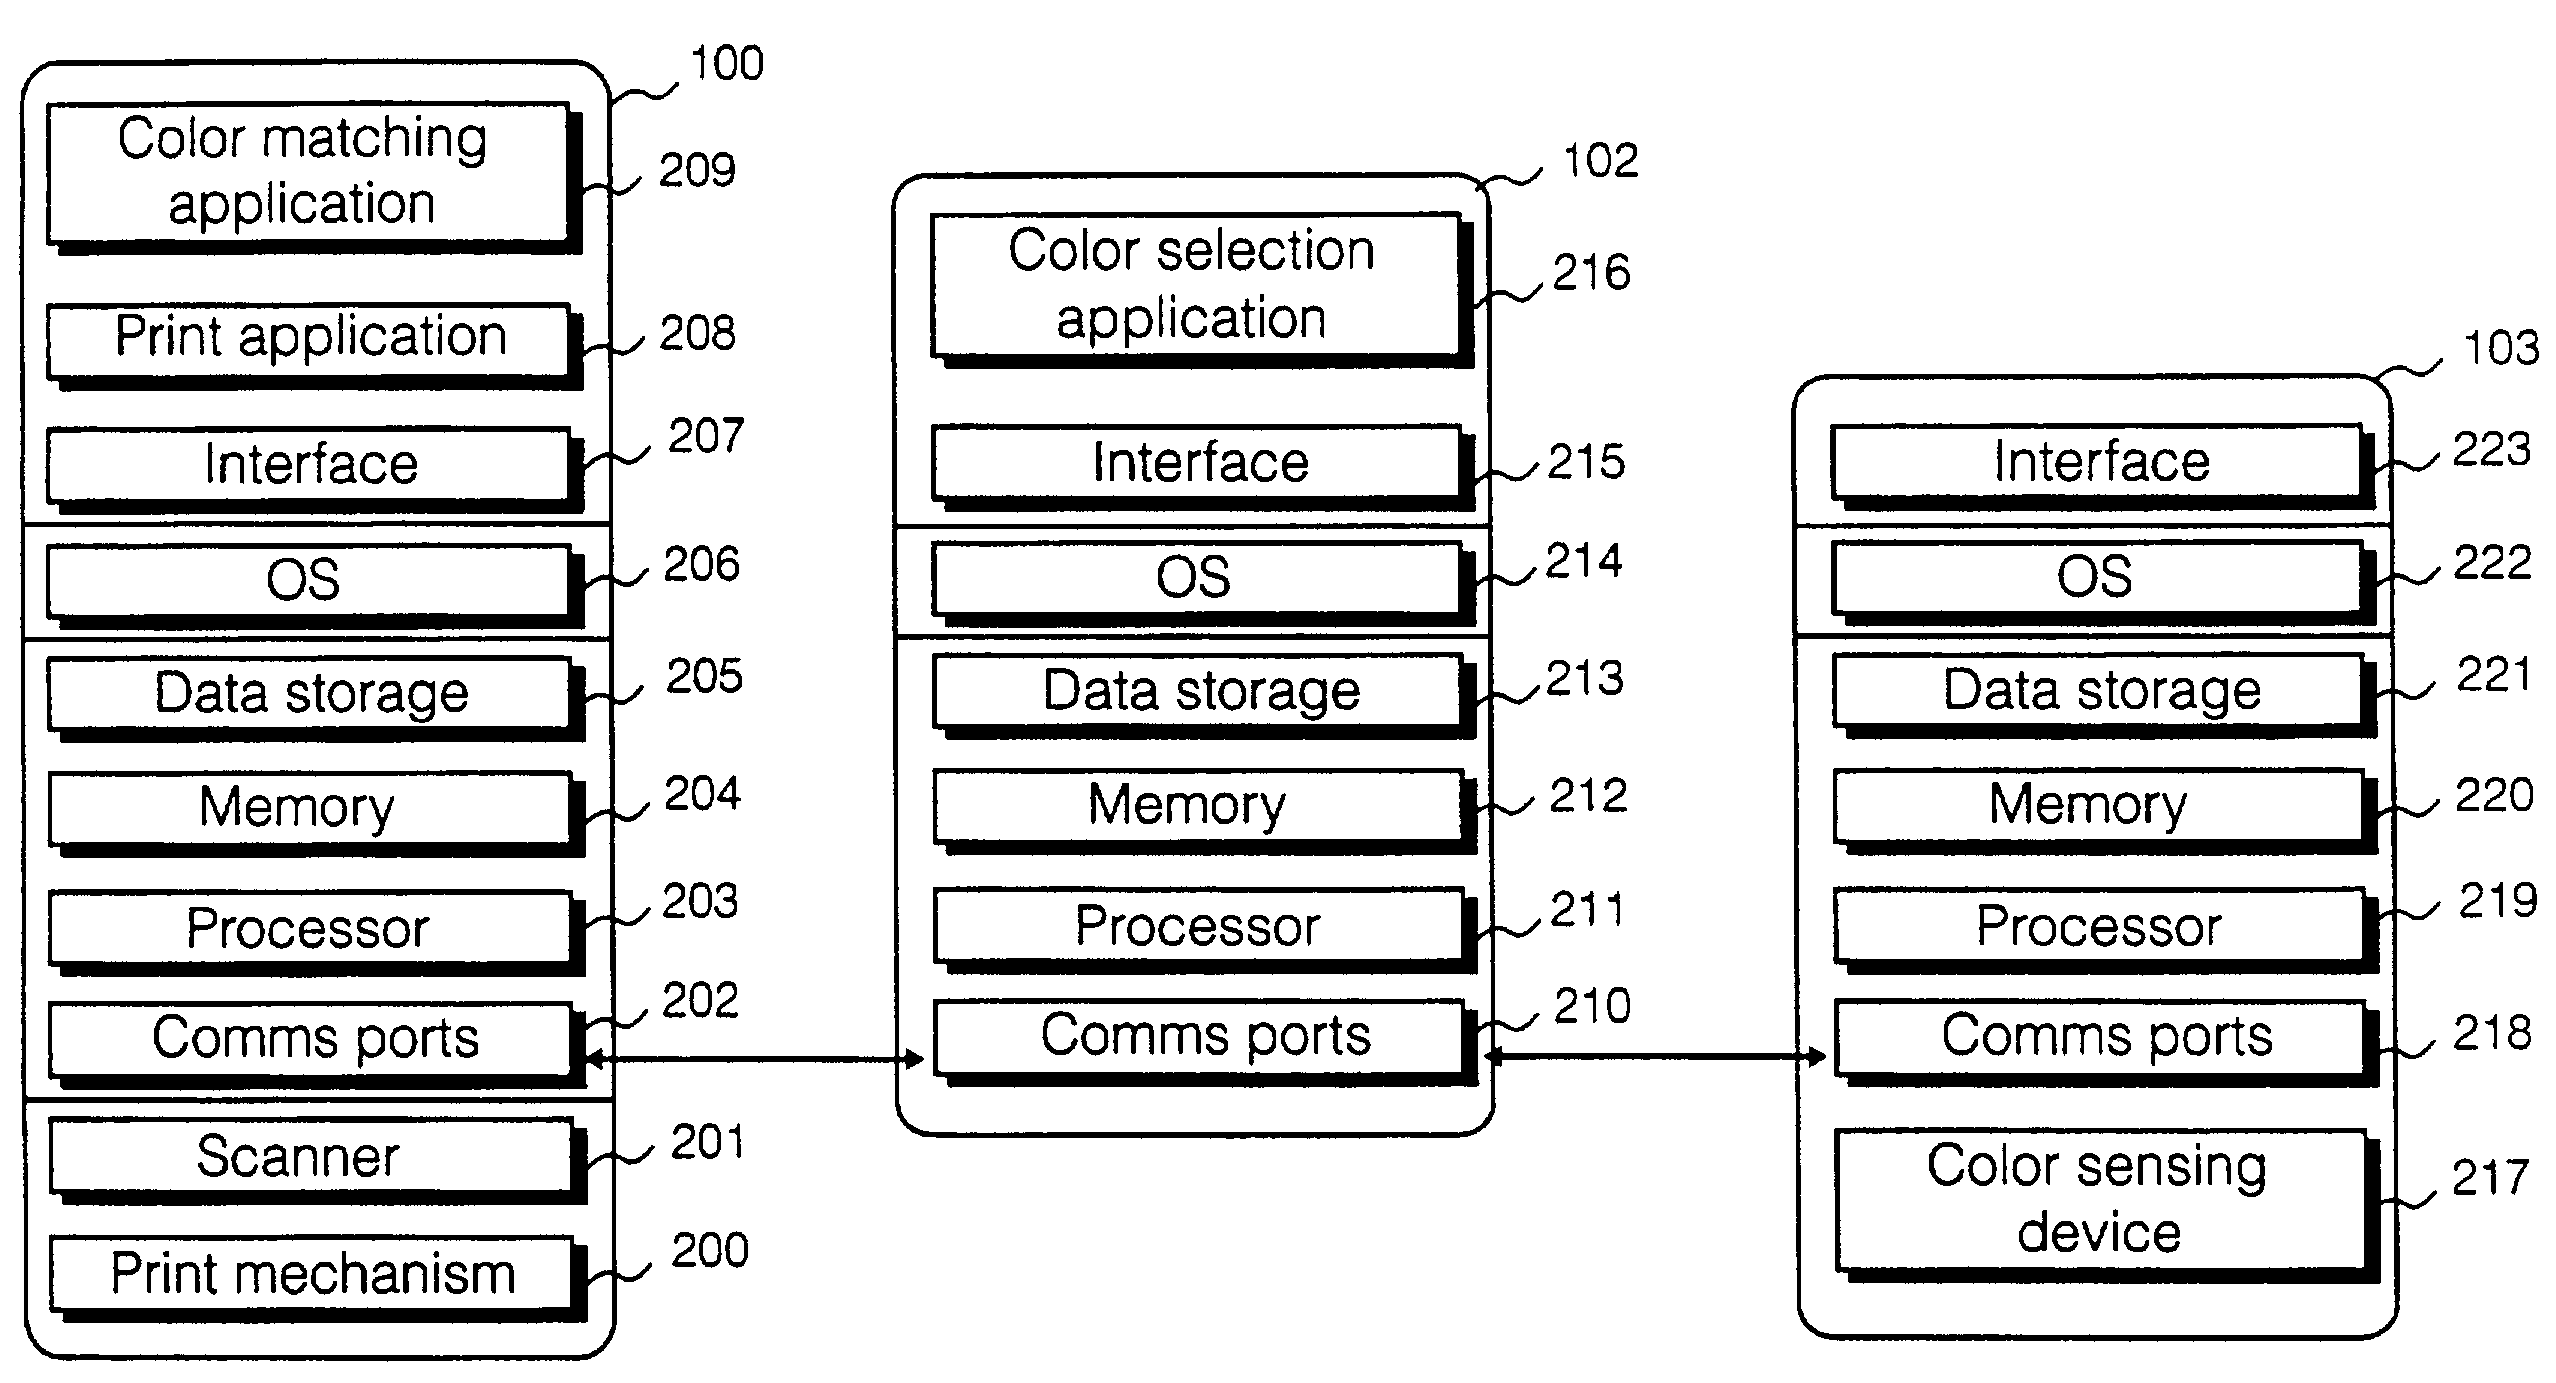 Spot color application in printer device